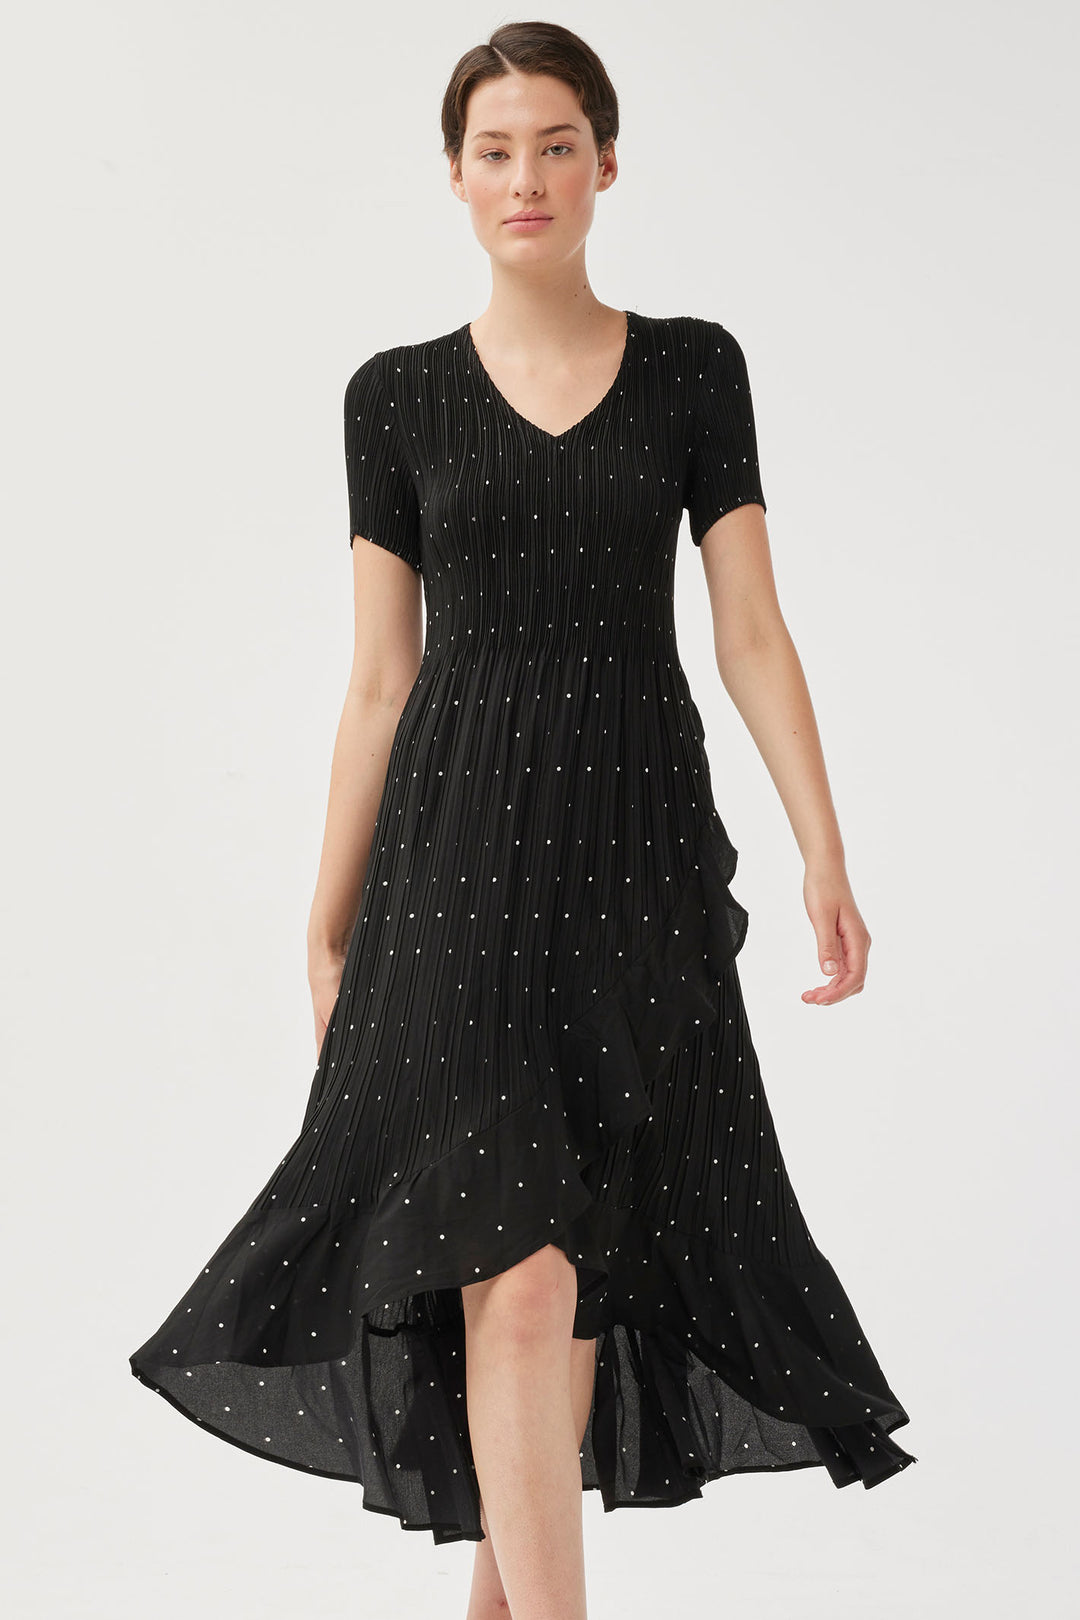 Leo & Ugo KER220 Black Polka Dot Print V-Neck Short Sleeve Pleat Dress - Experience Boutique